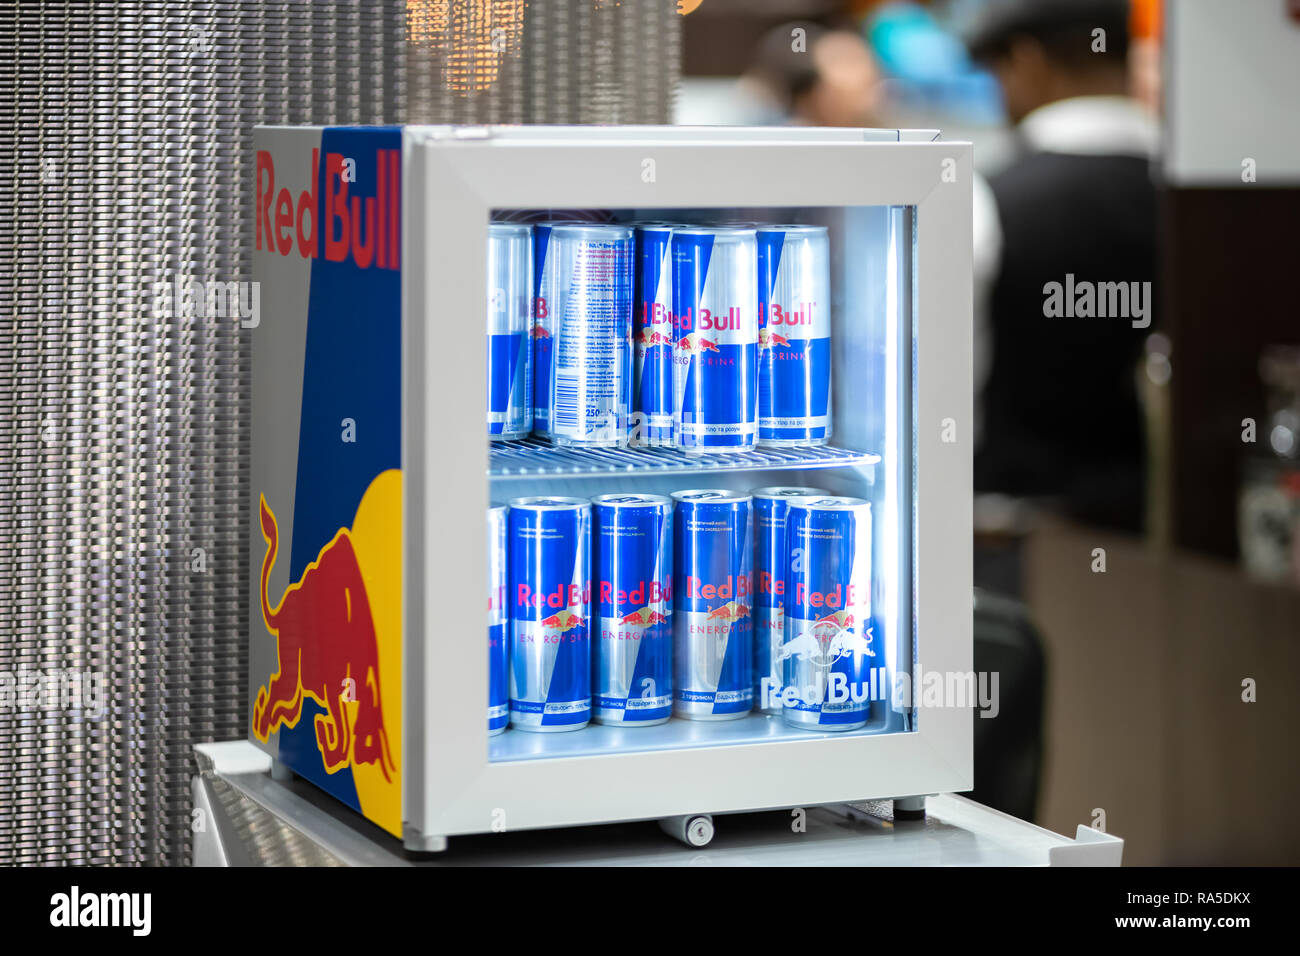 https://c8.alamy.com/comp/RA5DKX/kyiv-ukraine-september-28-2018-red-bull-branded-refrigerator-with-a-lot-of-aluminum-cans-RA5DKX.jpg